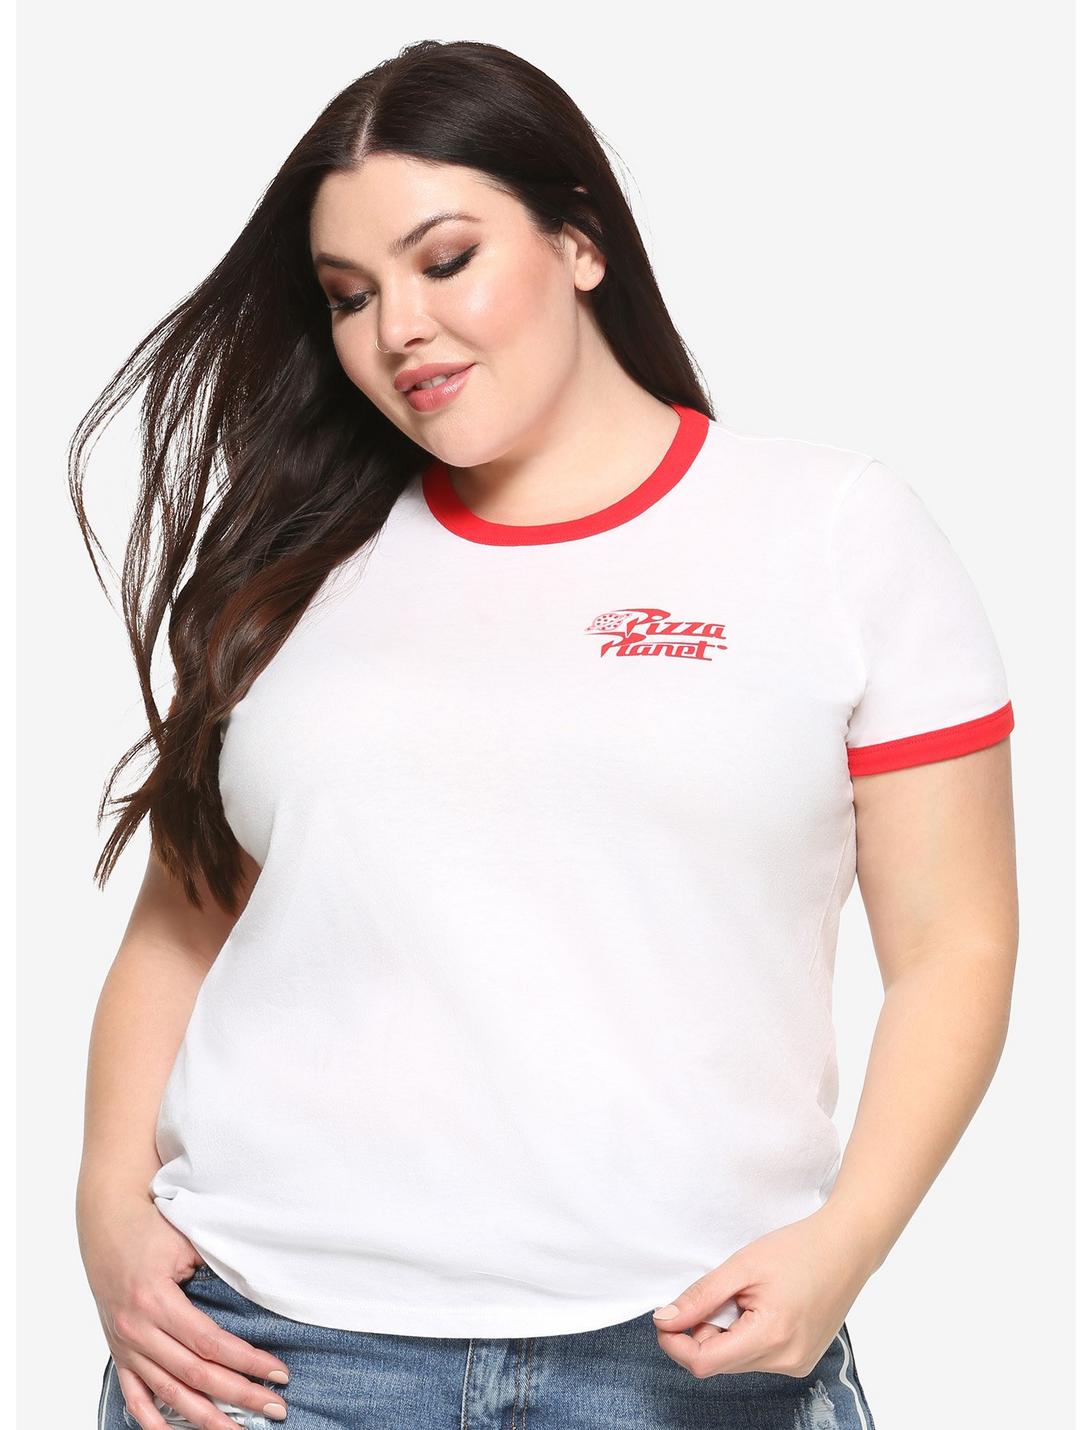 Disney Pixar Toy Story Pizza Planet Girls Ringer T-Shirt Plus Size, RED, hi-res